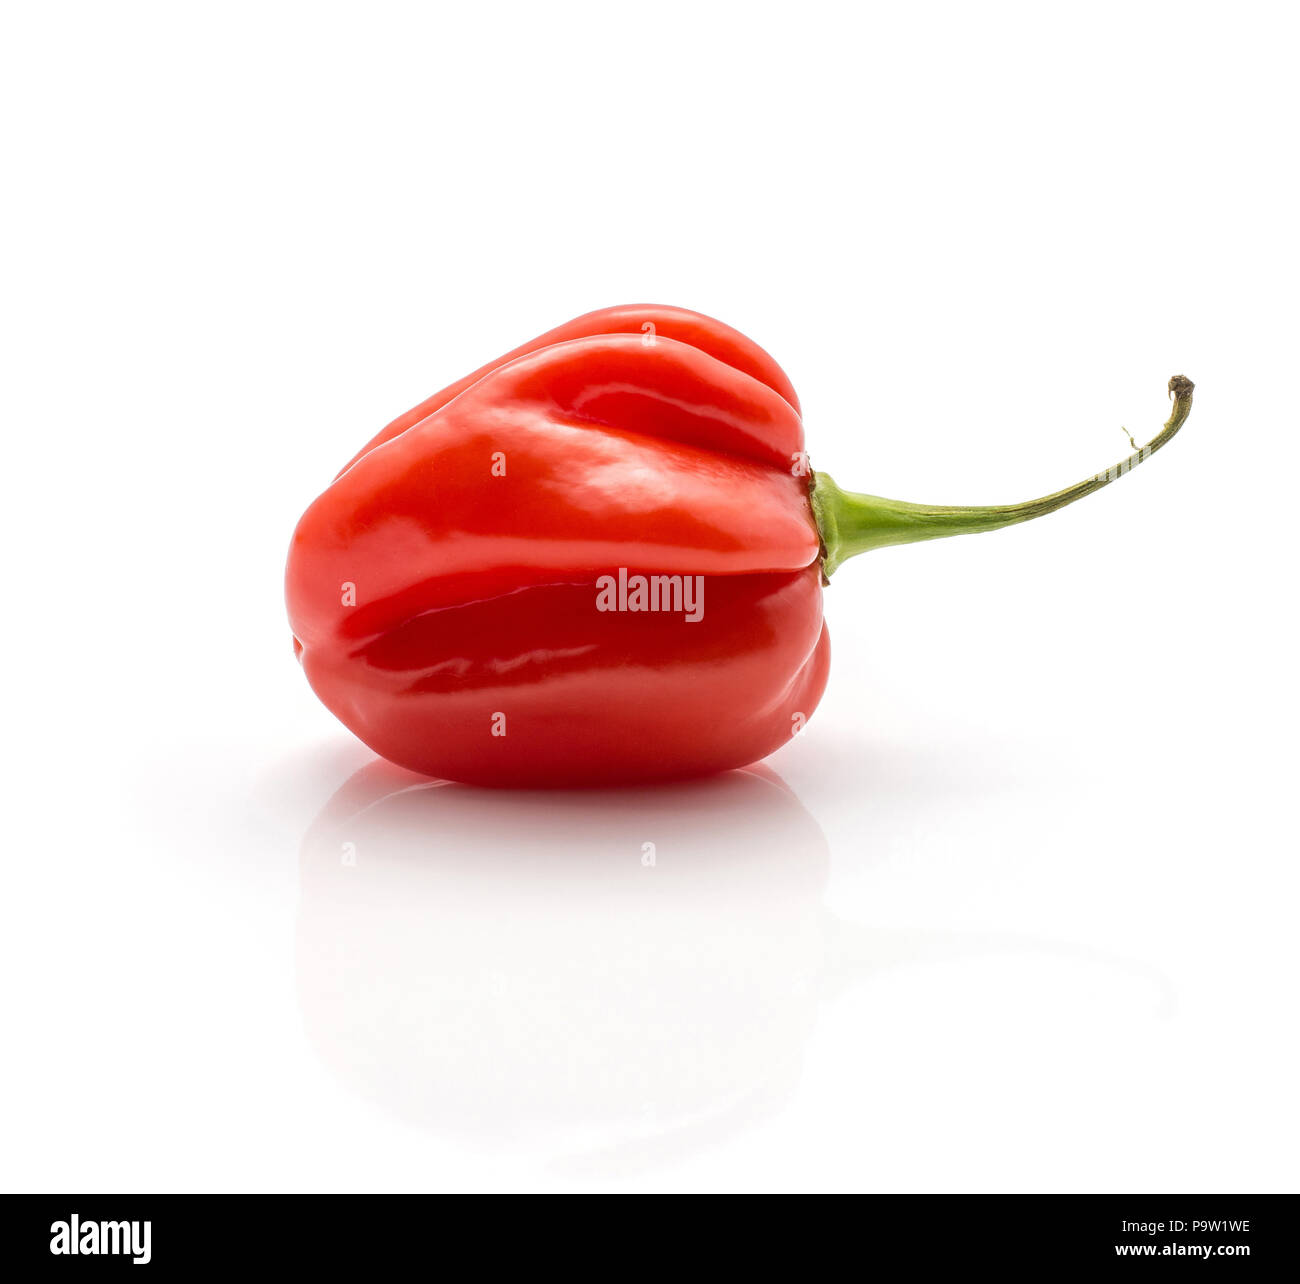 One Habanero chili red hot pepper isolated on white background Stock Photo